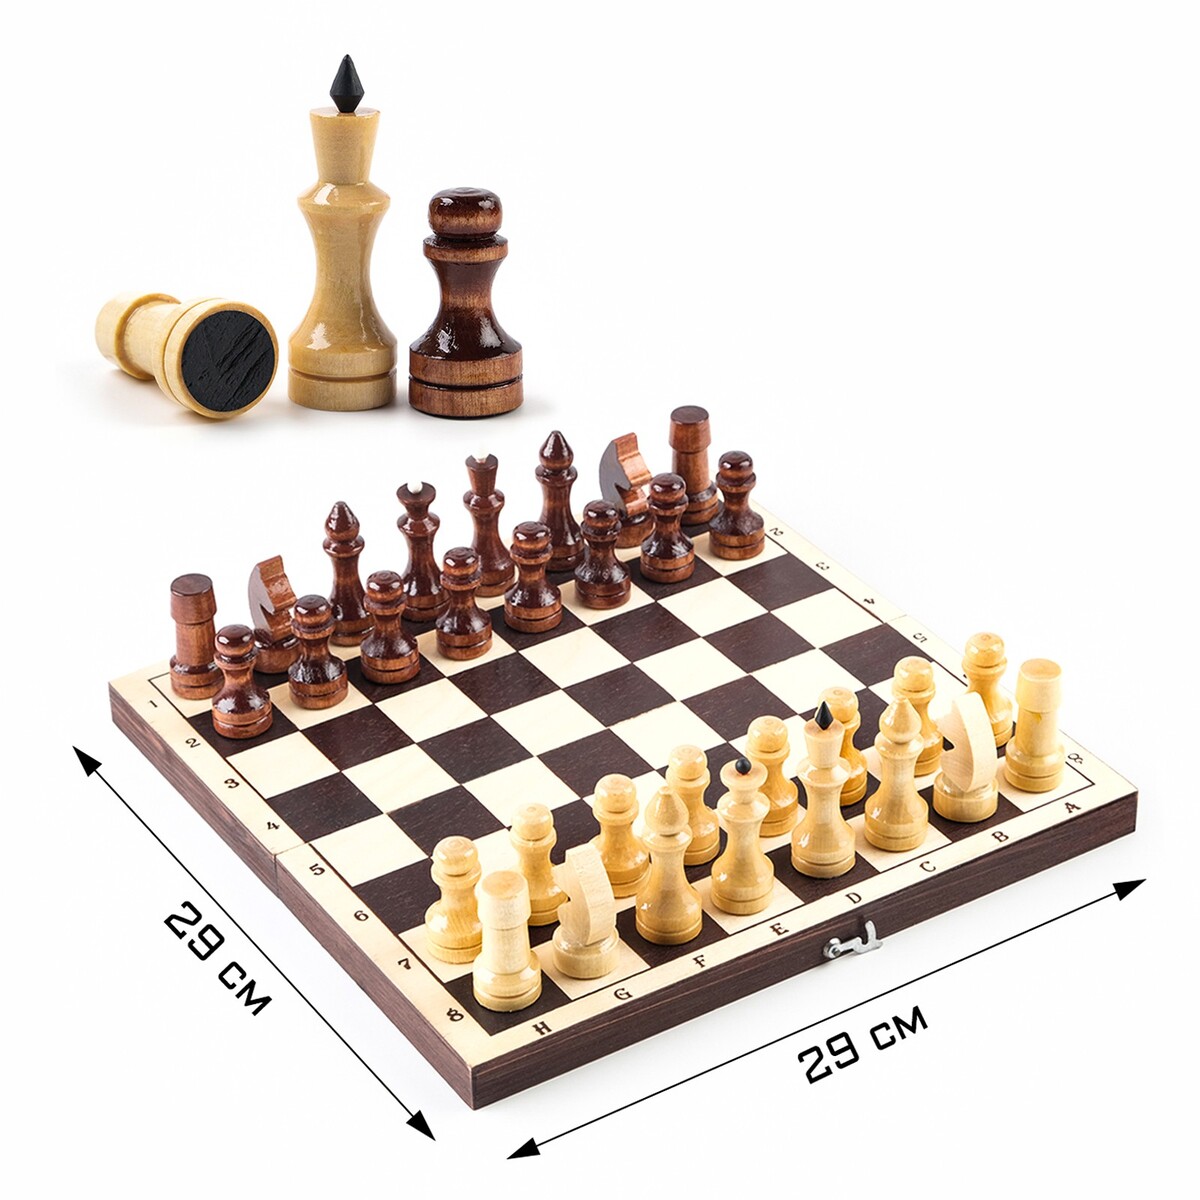 Шахматы обиходные, 29 х 29 х 4.3 см, темная доска, фигуры лак шахматы обиходные 29 х 29 см доска дерево фигуры пластик король h 6 5 см пешка h 3 5 см